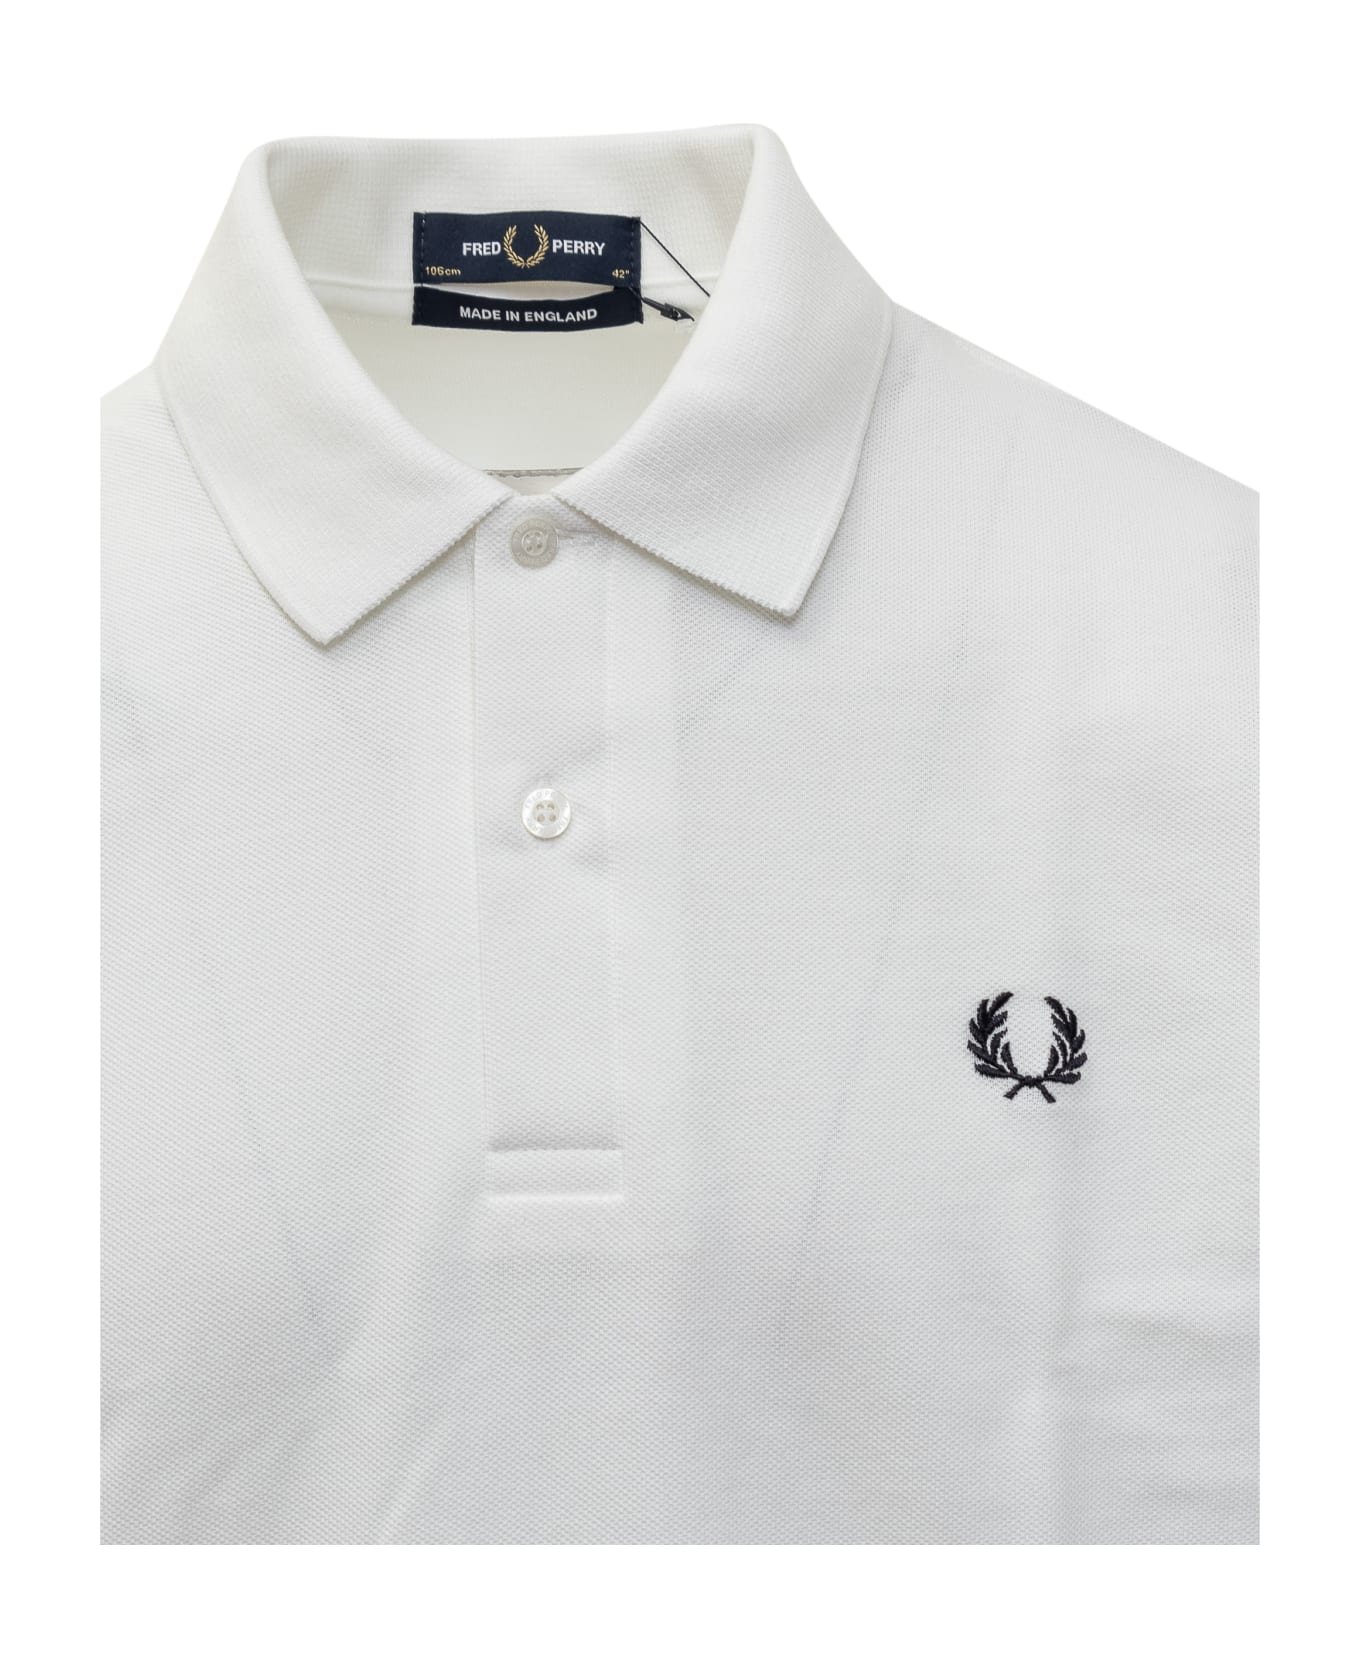 Fred Perry The Original Polo Shirt - WHITE